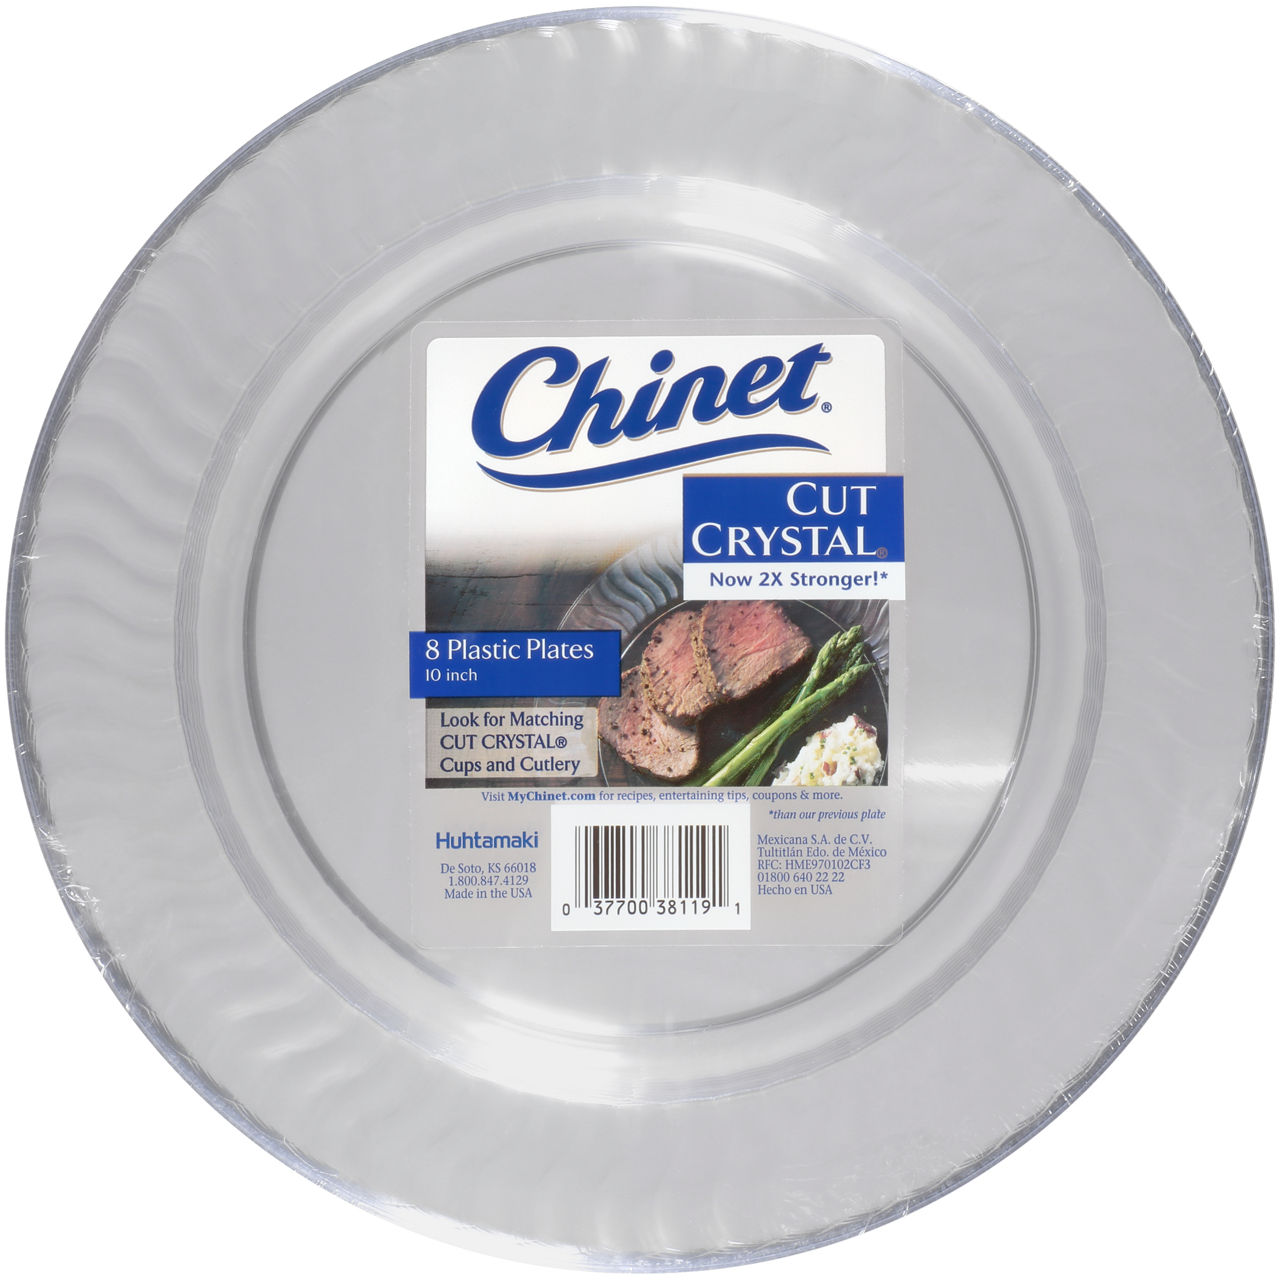 Chinet Cut Crystal 10-Inch Plates, 8 ct - Harris Teeter